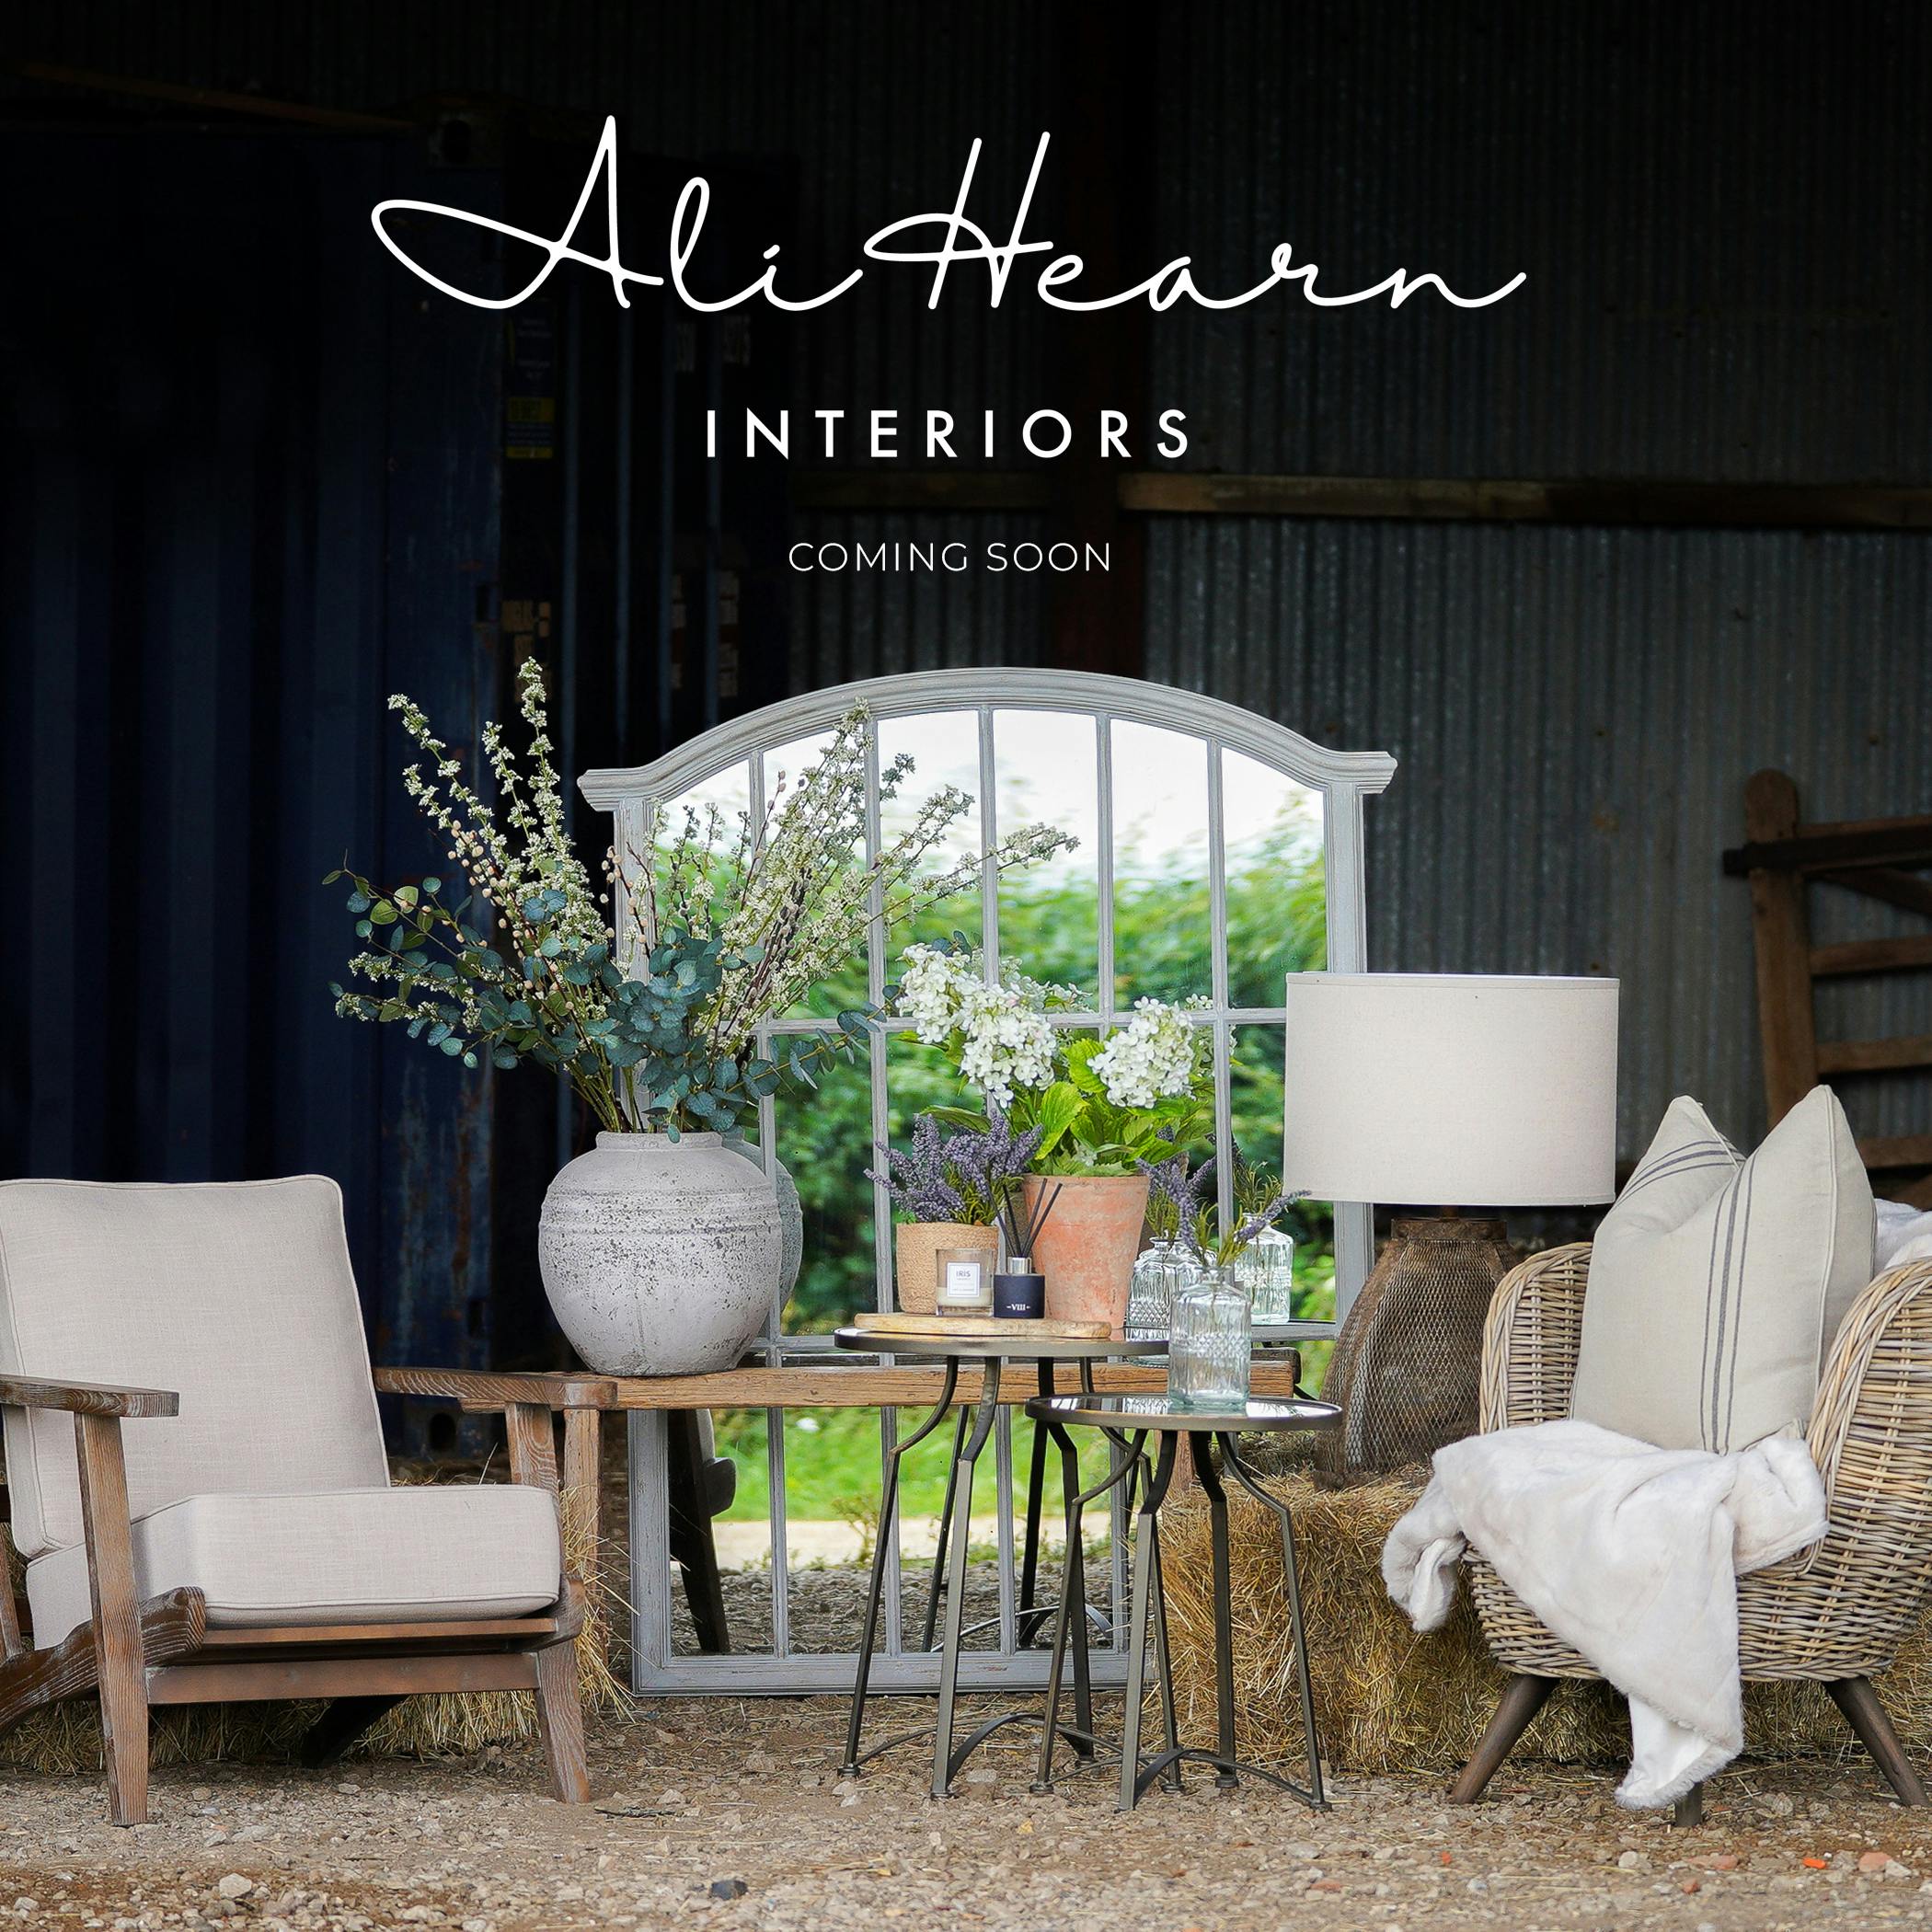 Ali Hearn Interiors - Coming Soon